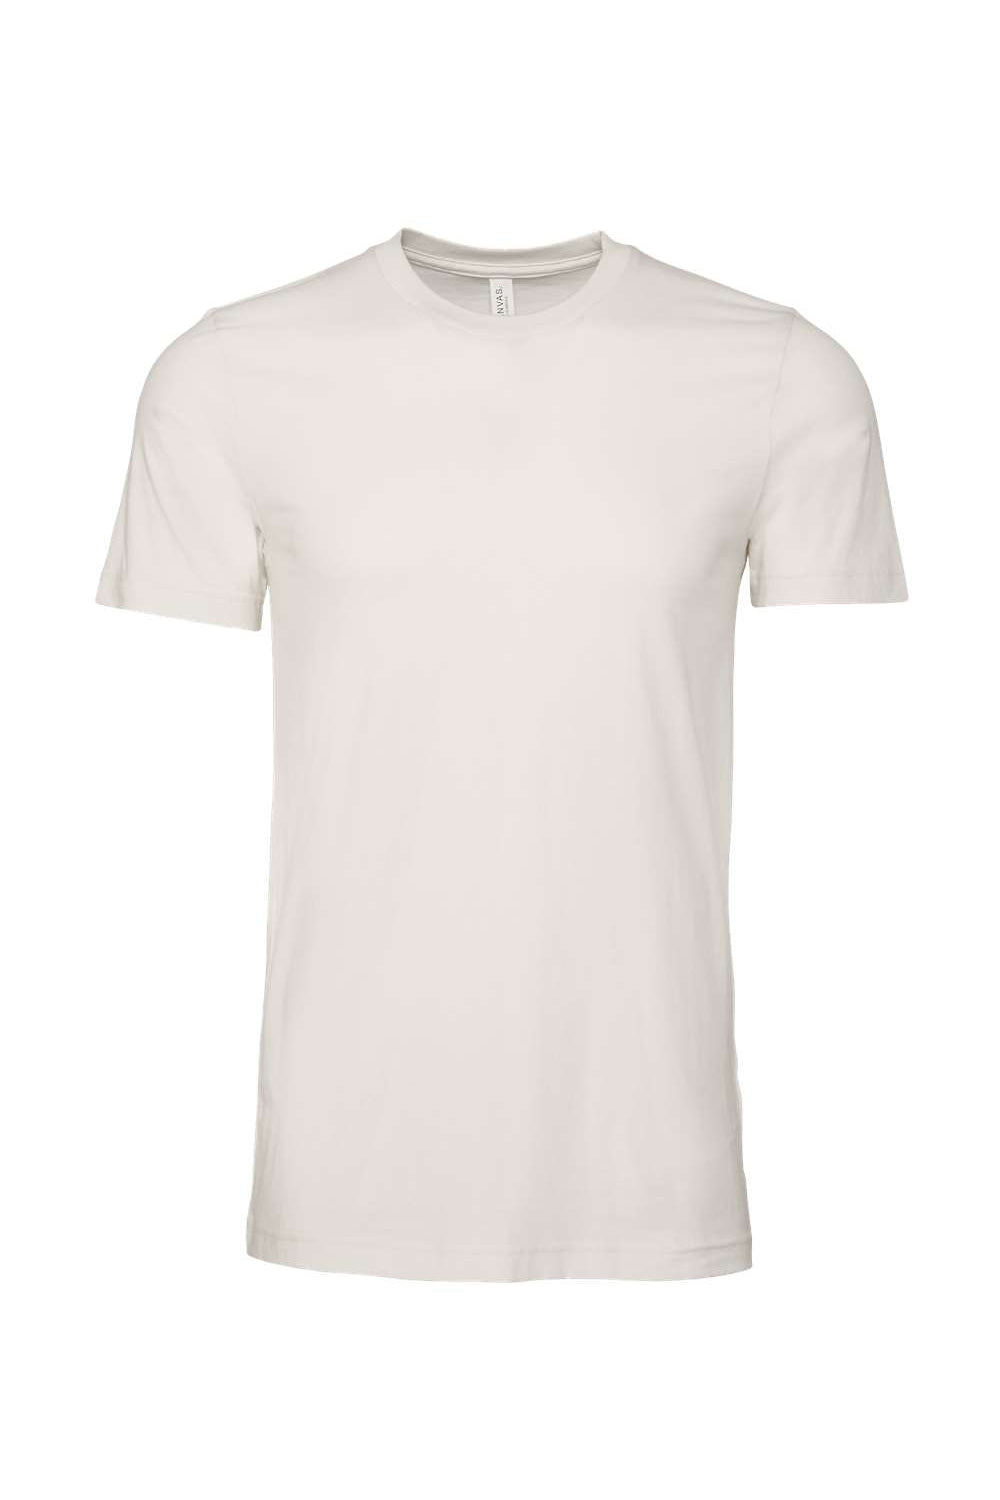 Bella + Canvas BC3001/3001C Mens Jersey Short Sleeve Crewneck T-Shirt Vintage White Flat Front